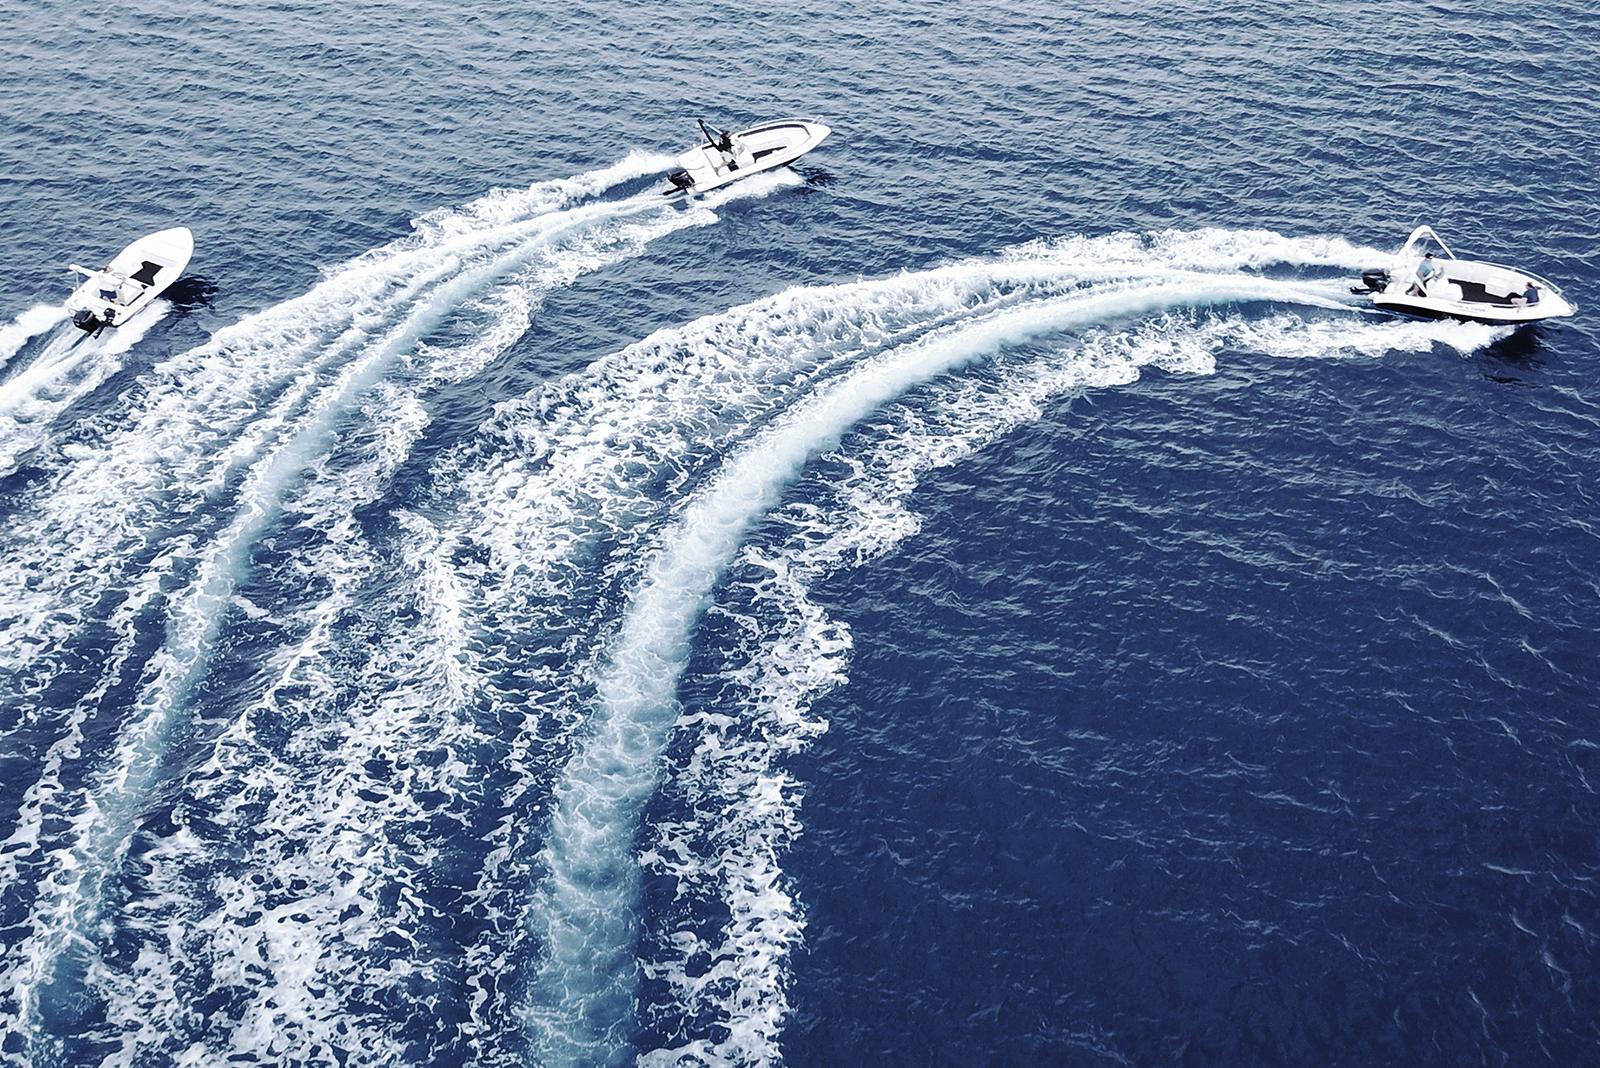 Three boats speeding in the open ocean cropped